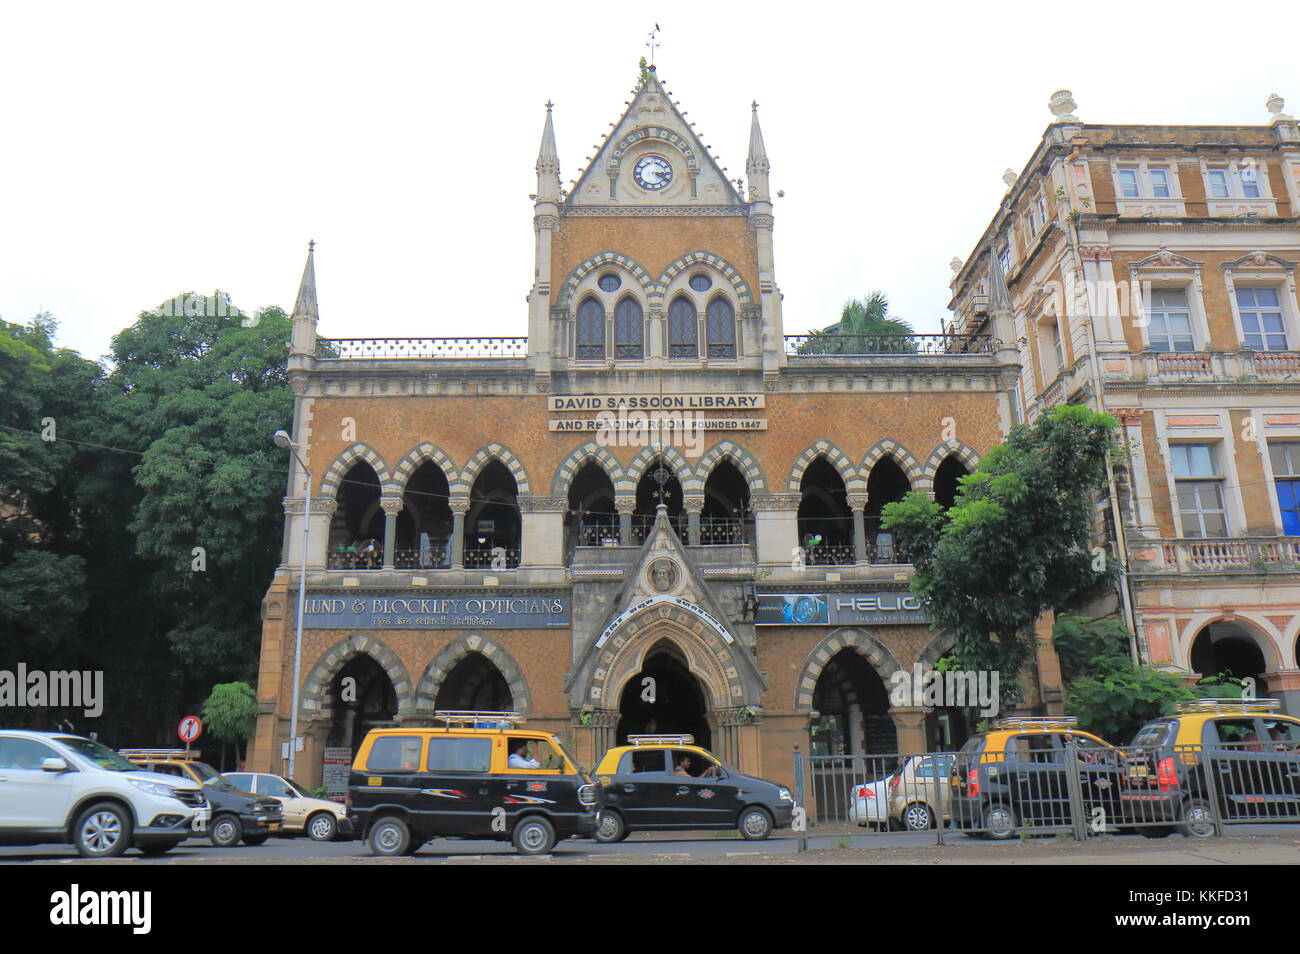 David Sassoon Library historical building in Mumbai India. Stock Photo